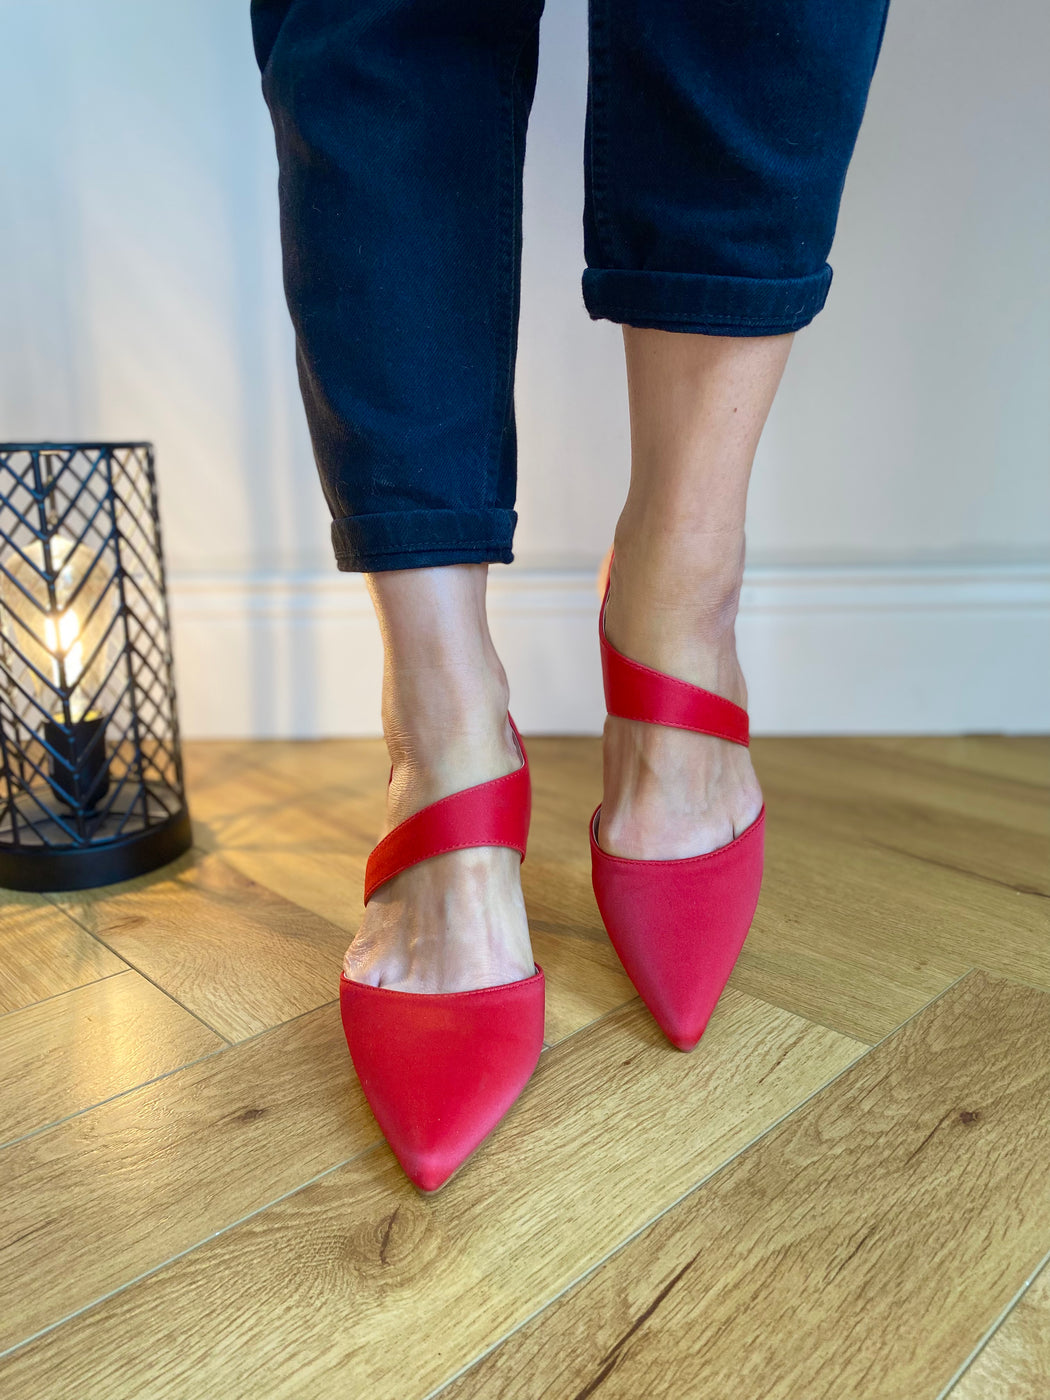 Lipstick red Castlemartyr heels